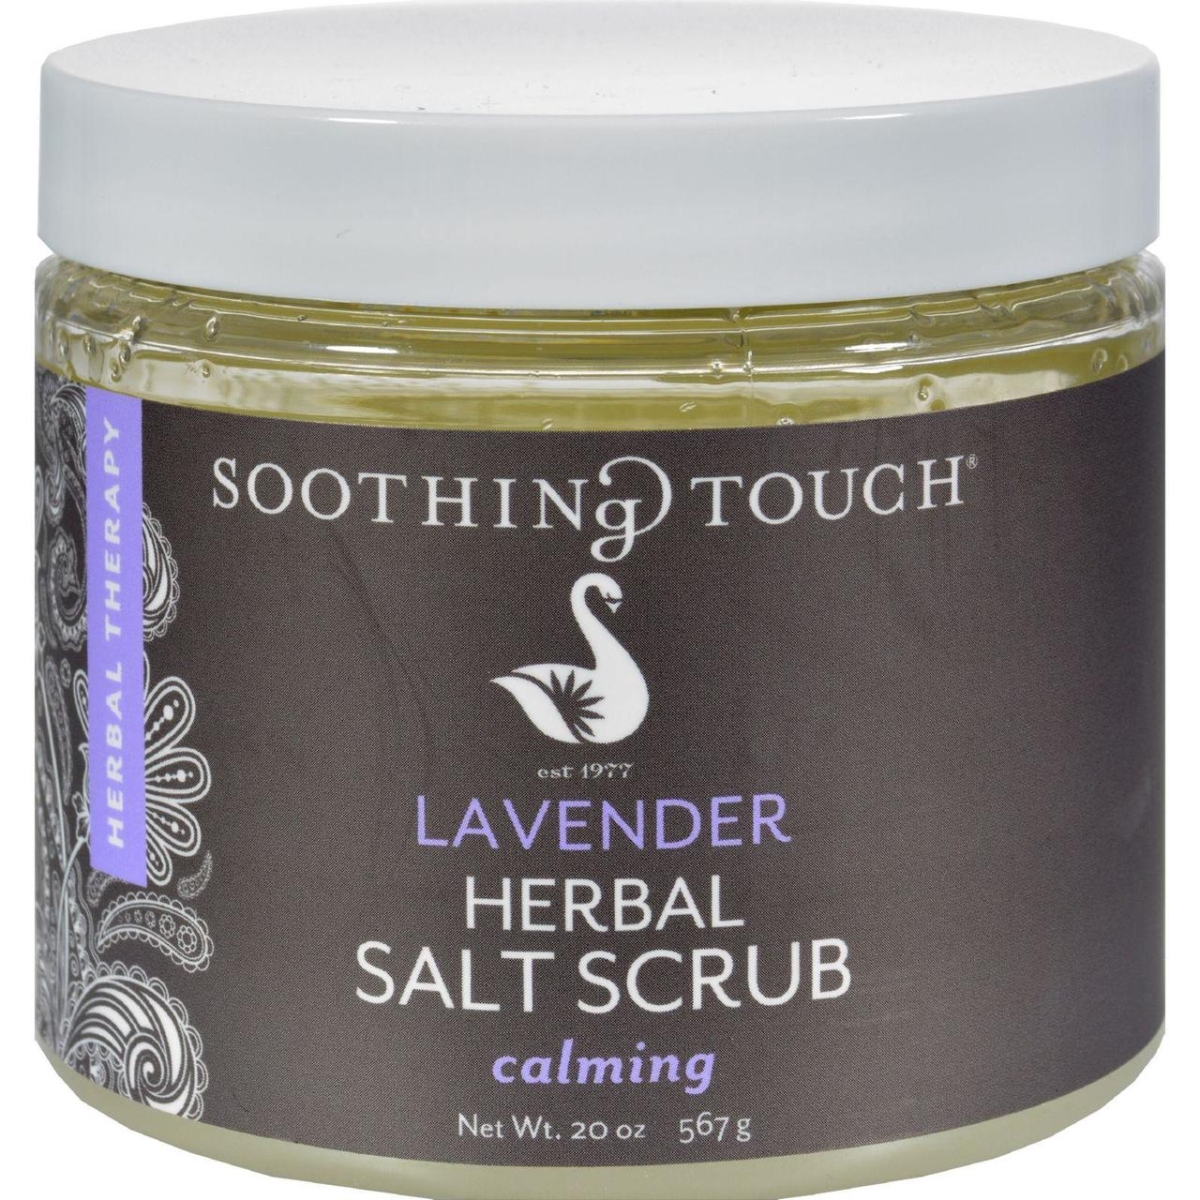 Hg0516740 20 Oz Salt Scrub - Lavender